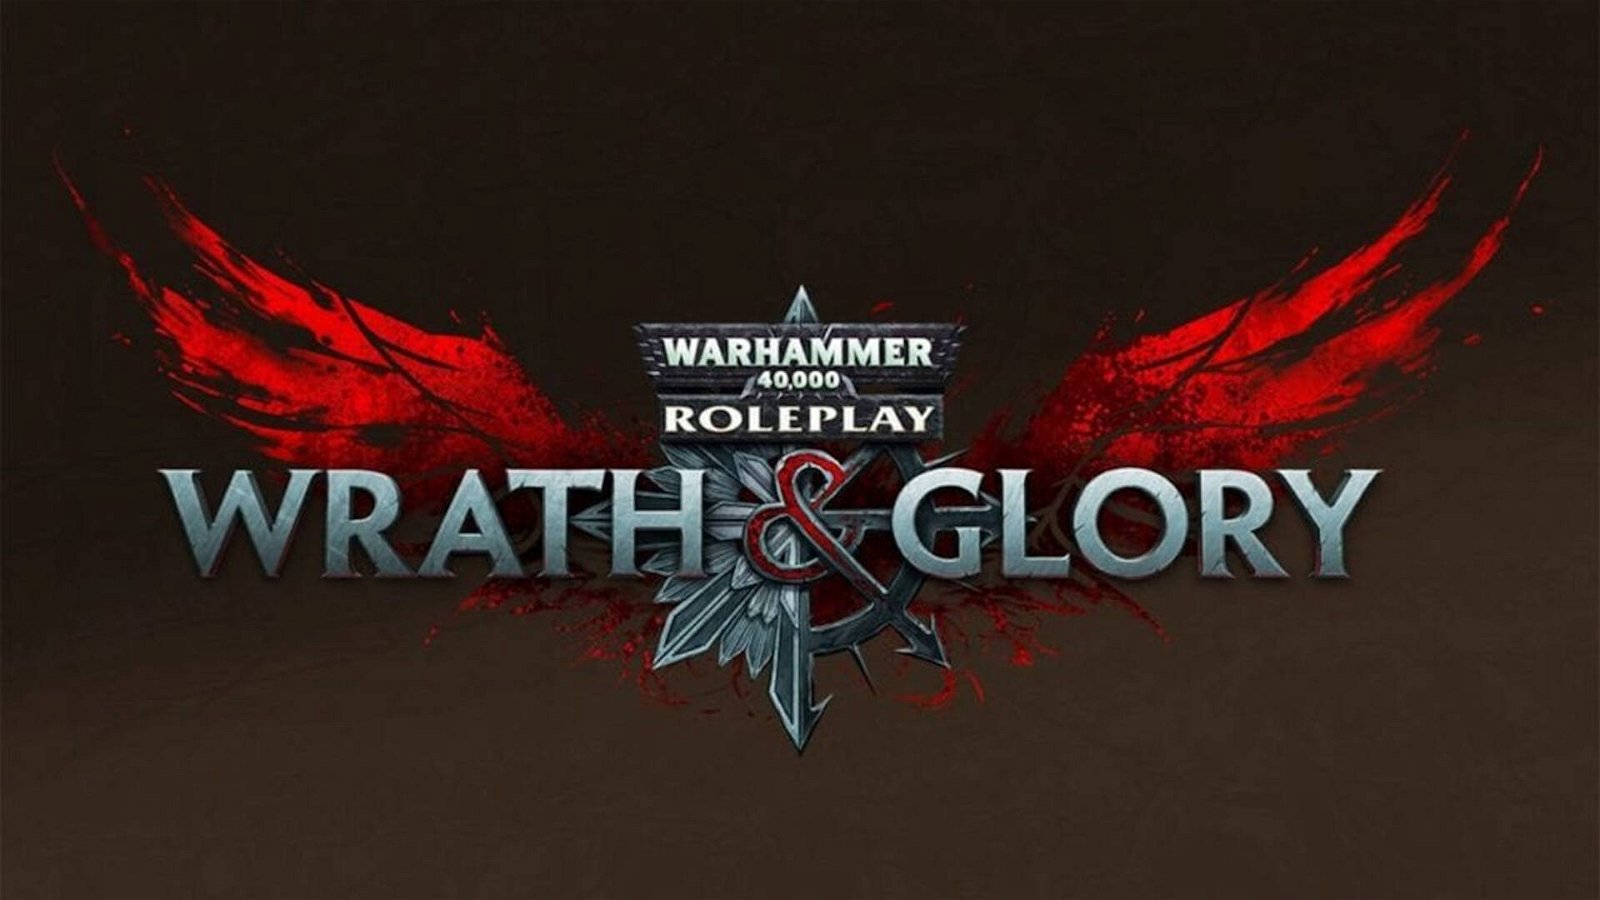 Immagine di Warhammer 40,000 Roleplay: Wrath & Glory – Manuale Base, la recensione